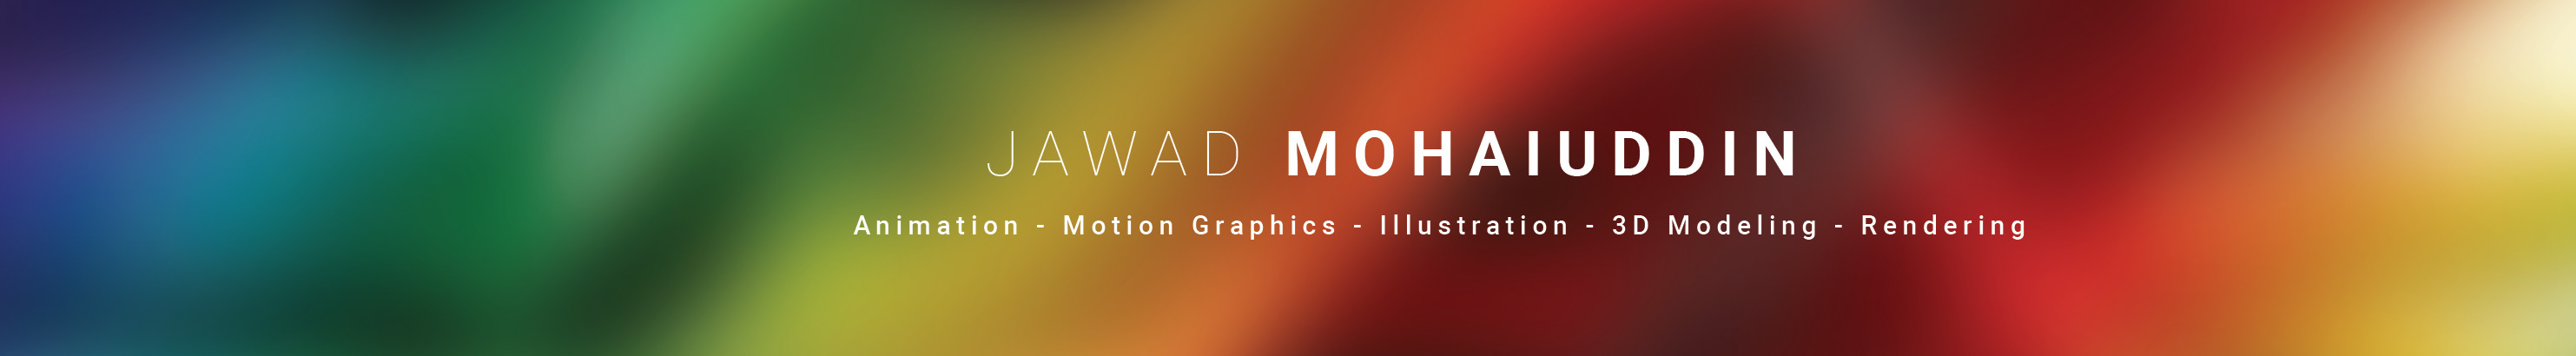 Jawad Mohaiuddin's profile banner